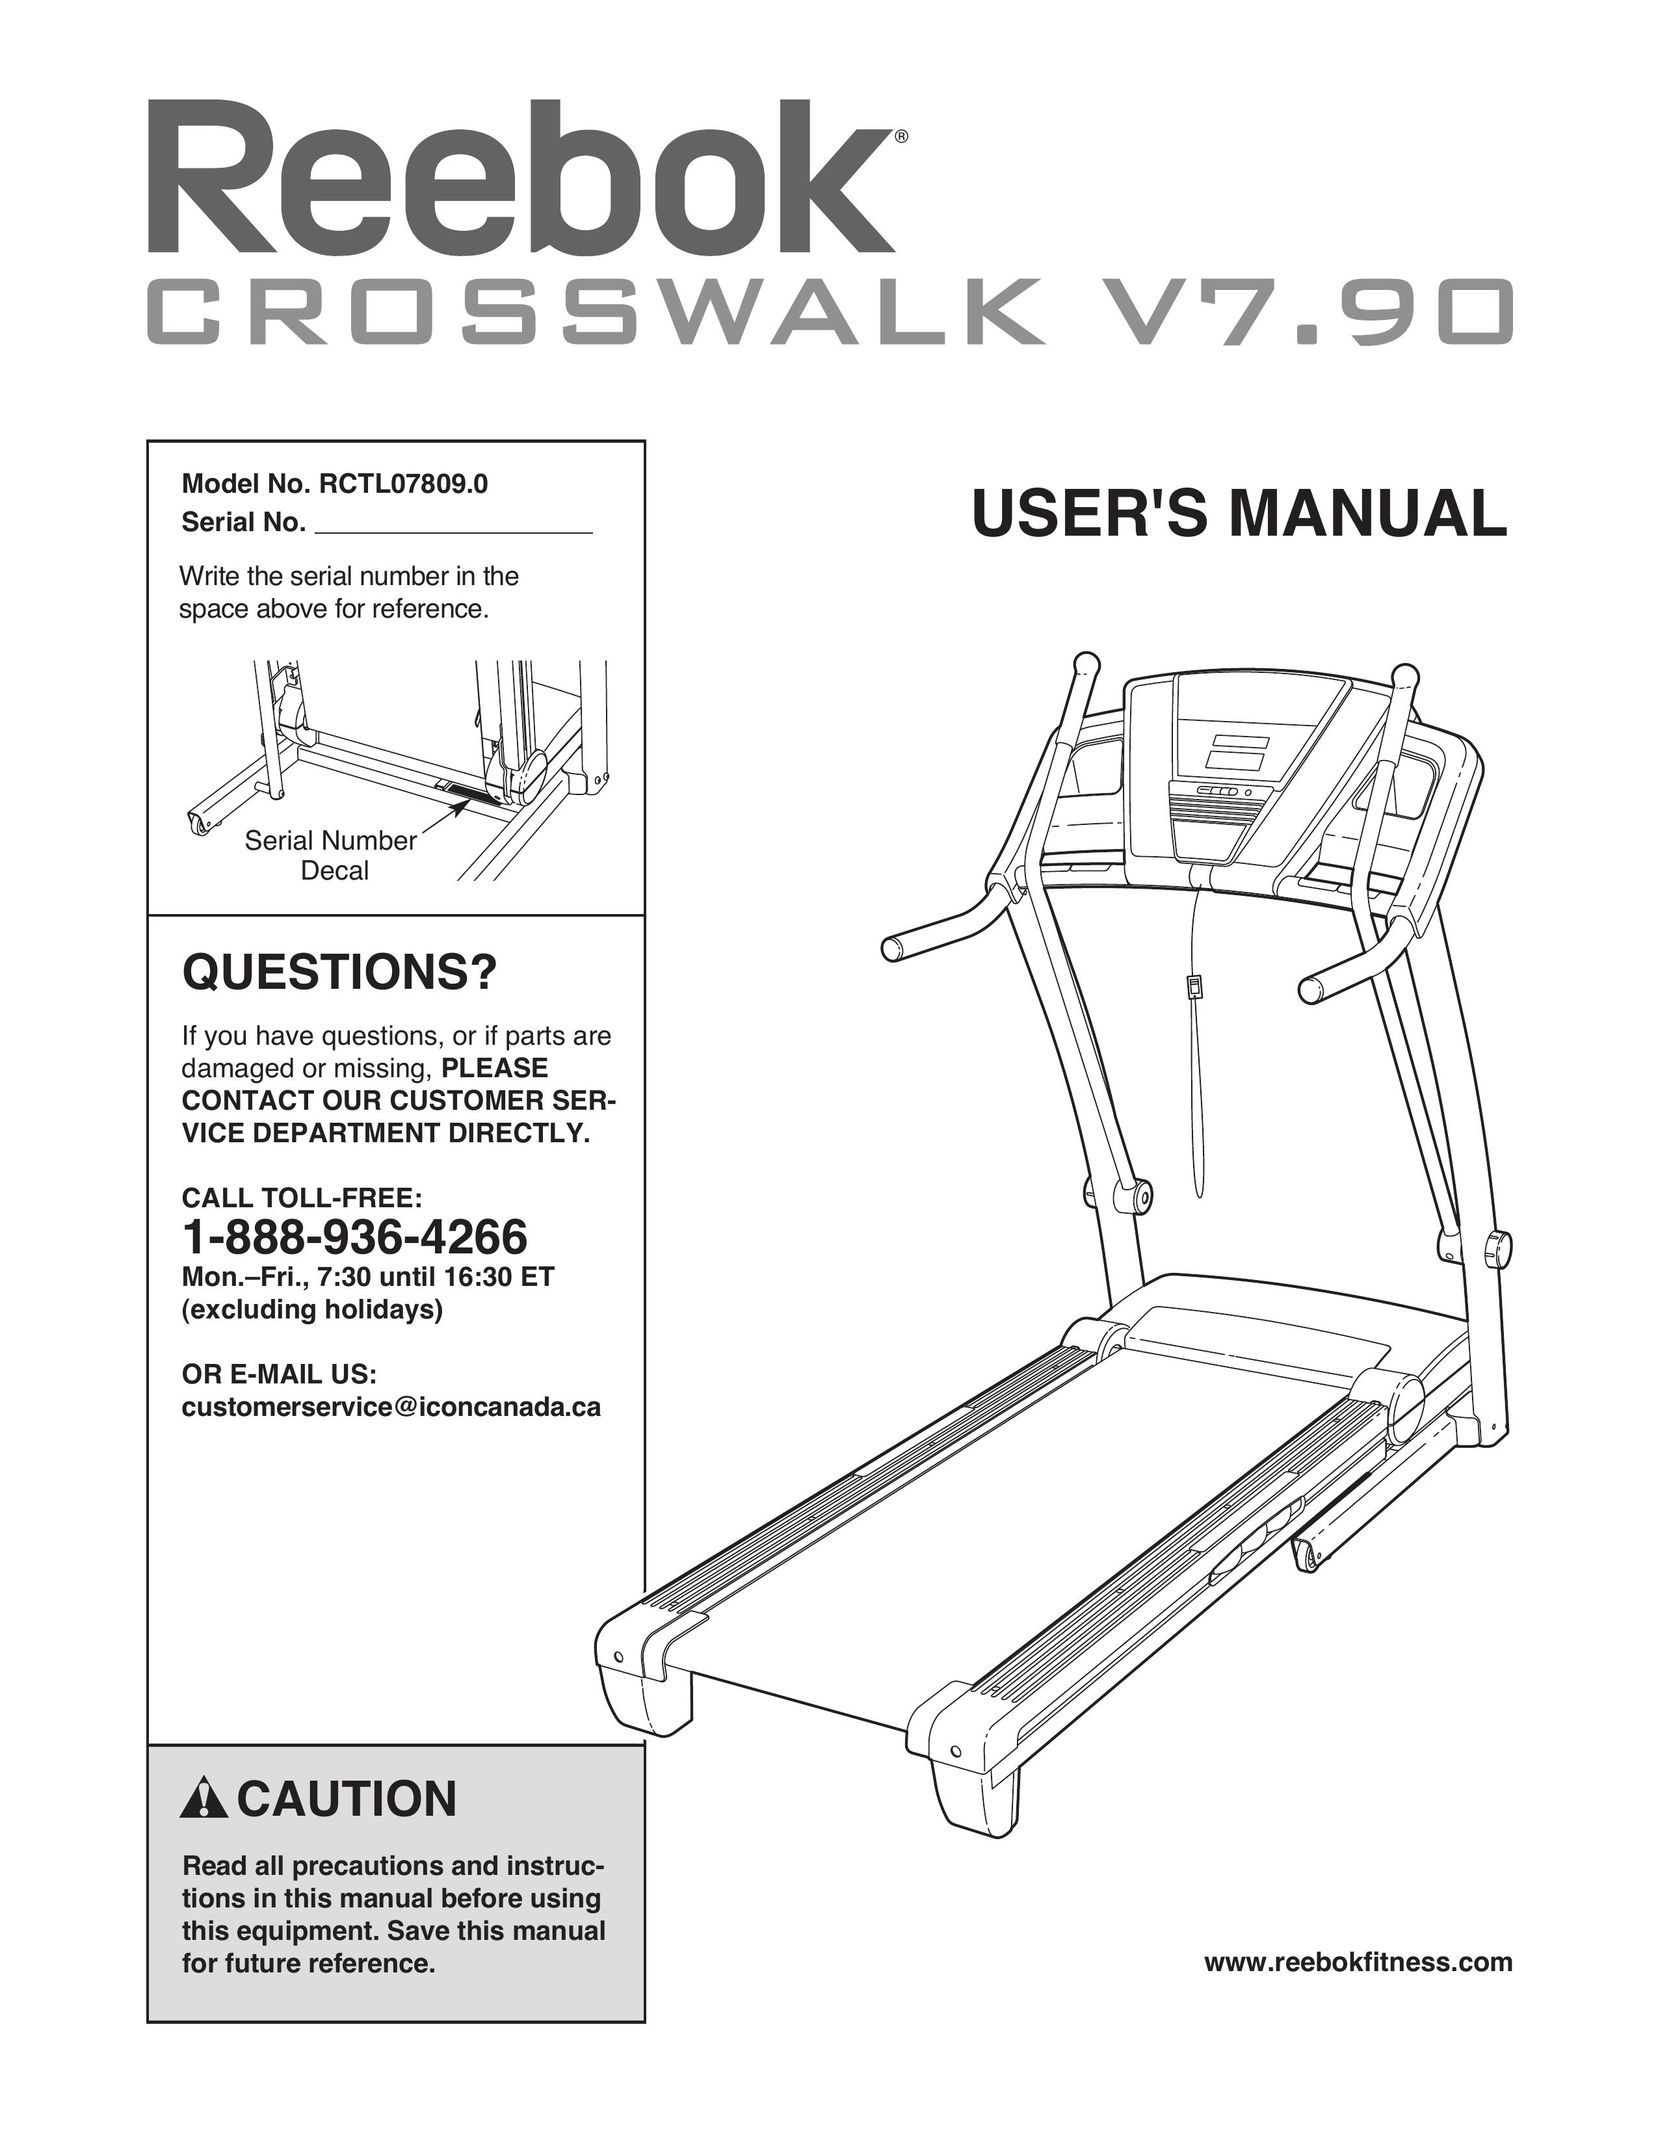 Reebok RCTL07809.0 Treadmill User Manual